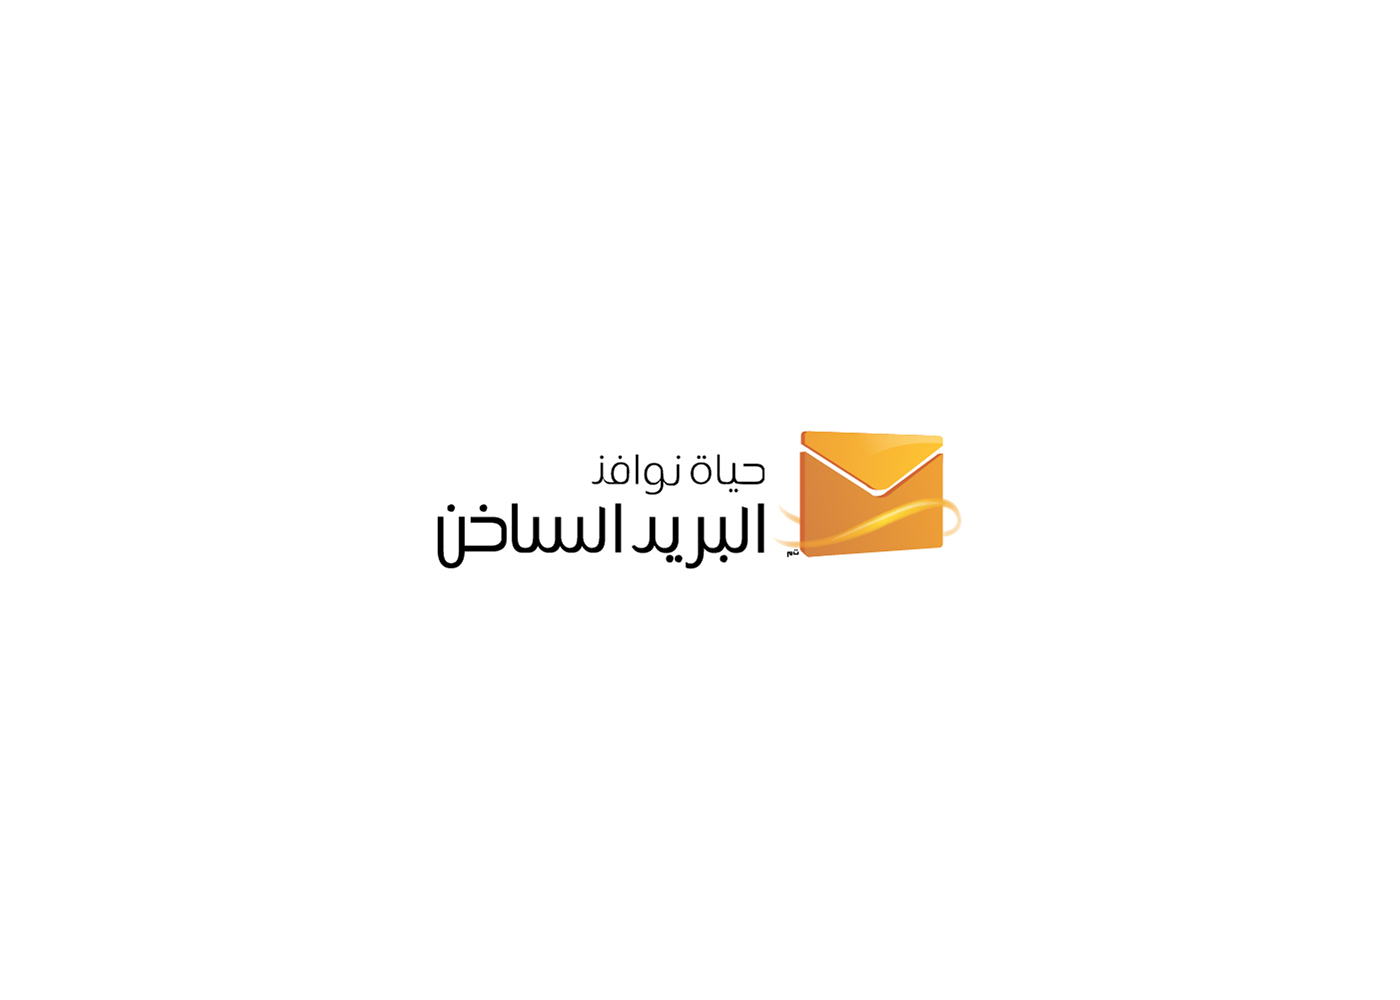 famous logos arabic translation language Arab Kuwait social media Website brand uplifting creative concept clever idea